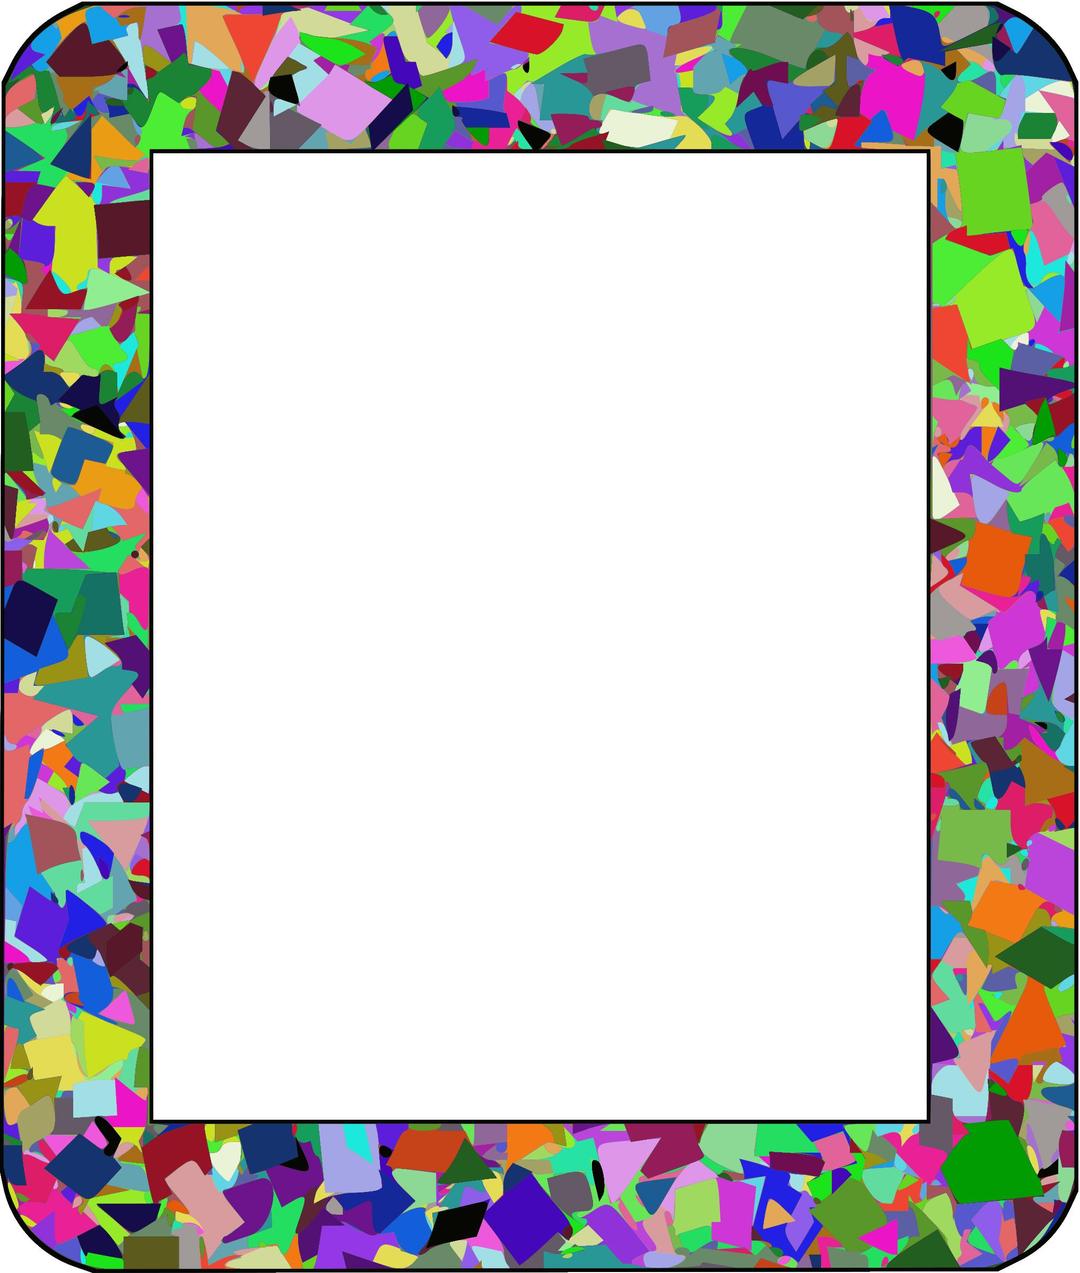 Confetti frame 1 png transparent